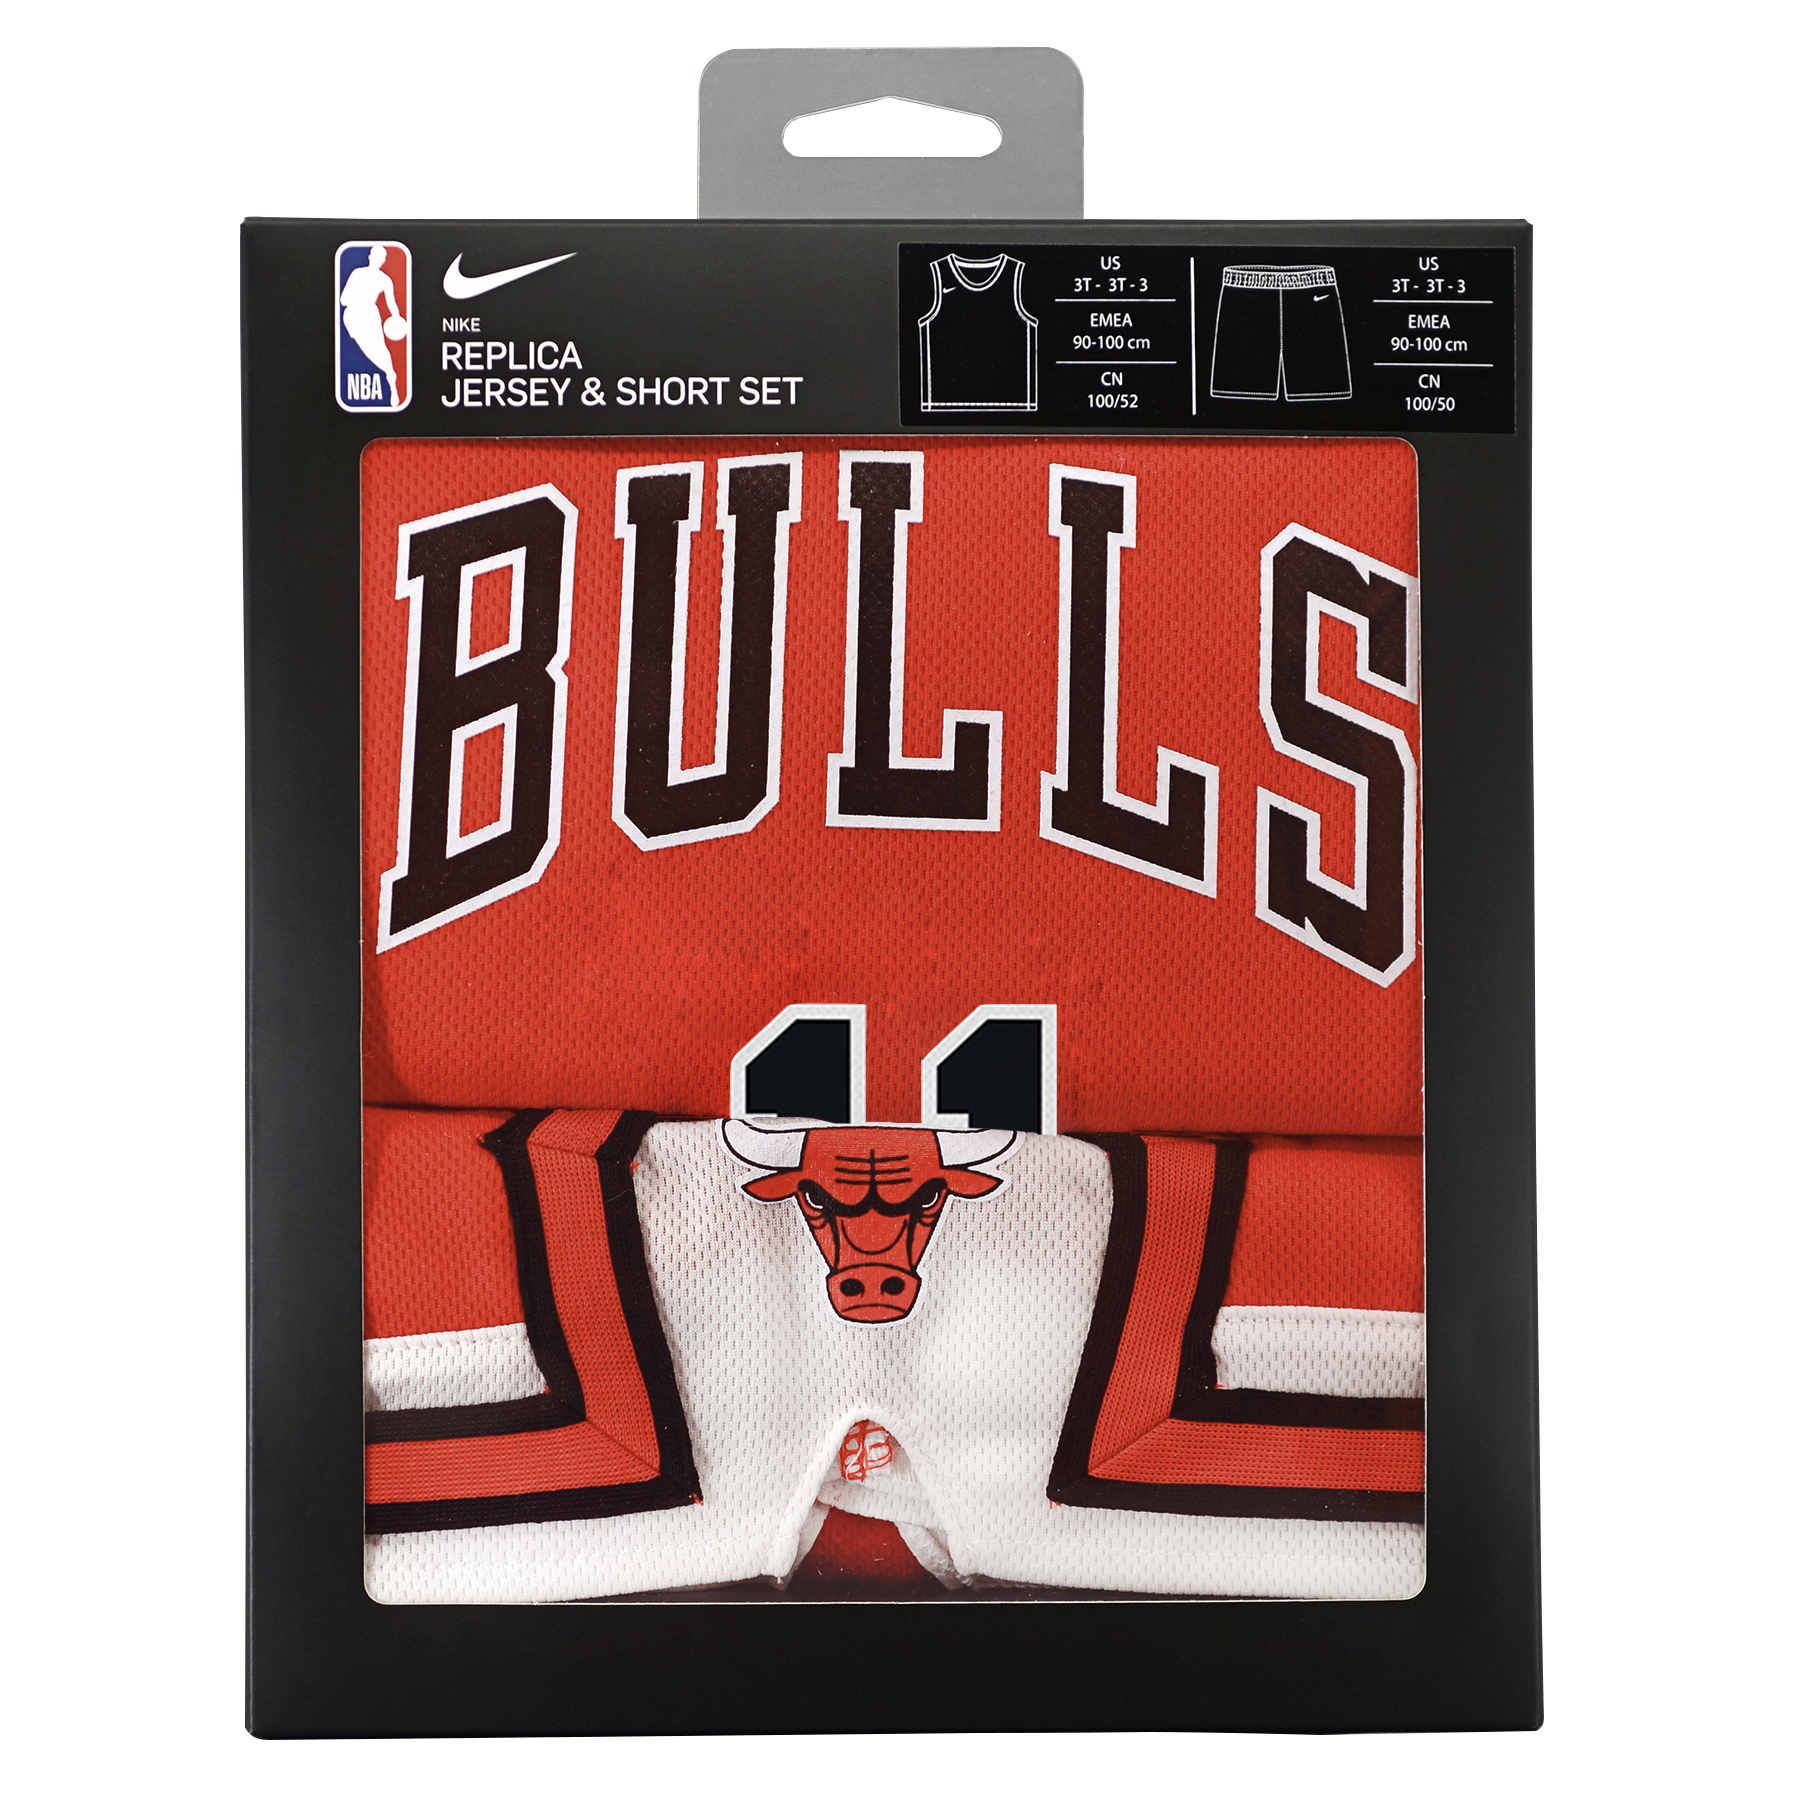 DeMar DeRozan Chicago Bulls Nike Youth Swingman Jersey - Icon Edition - Red